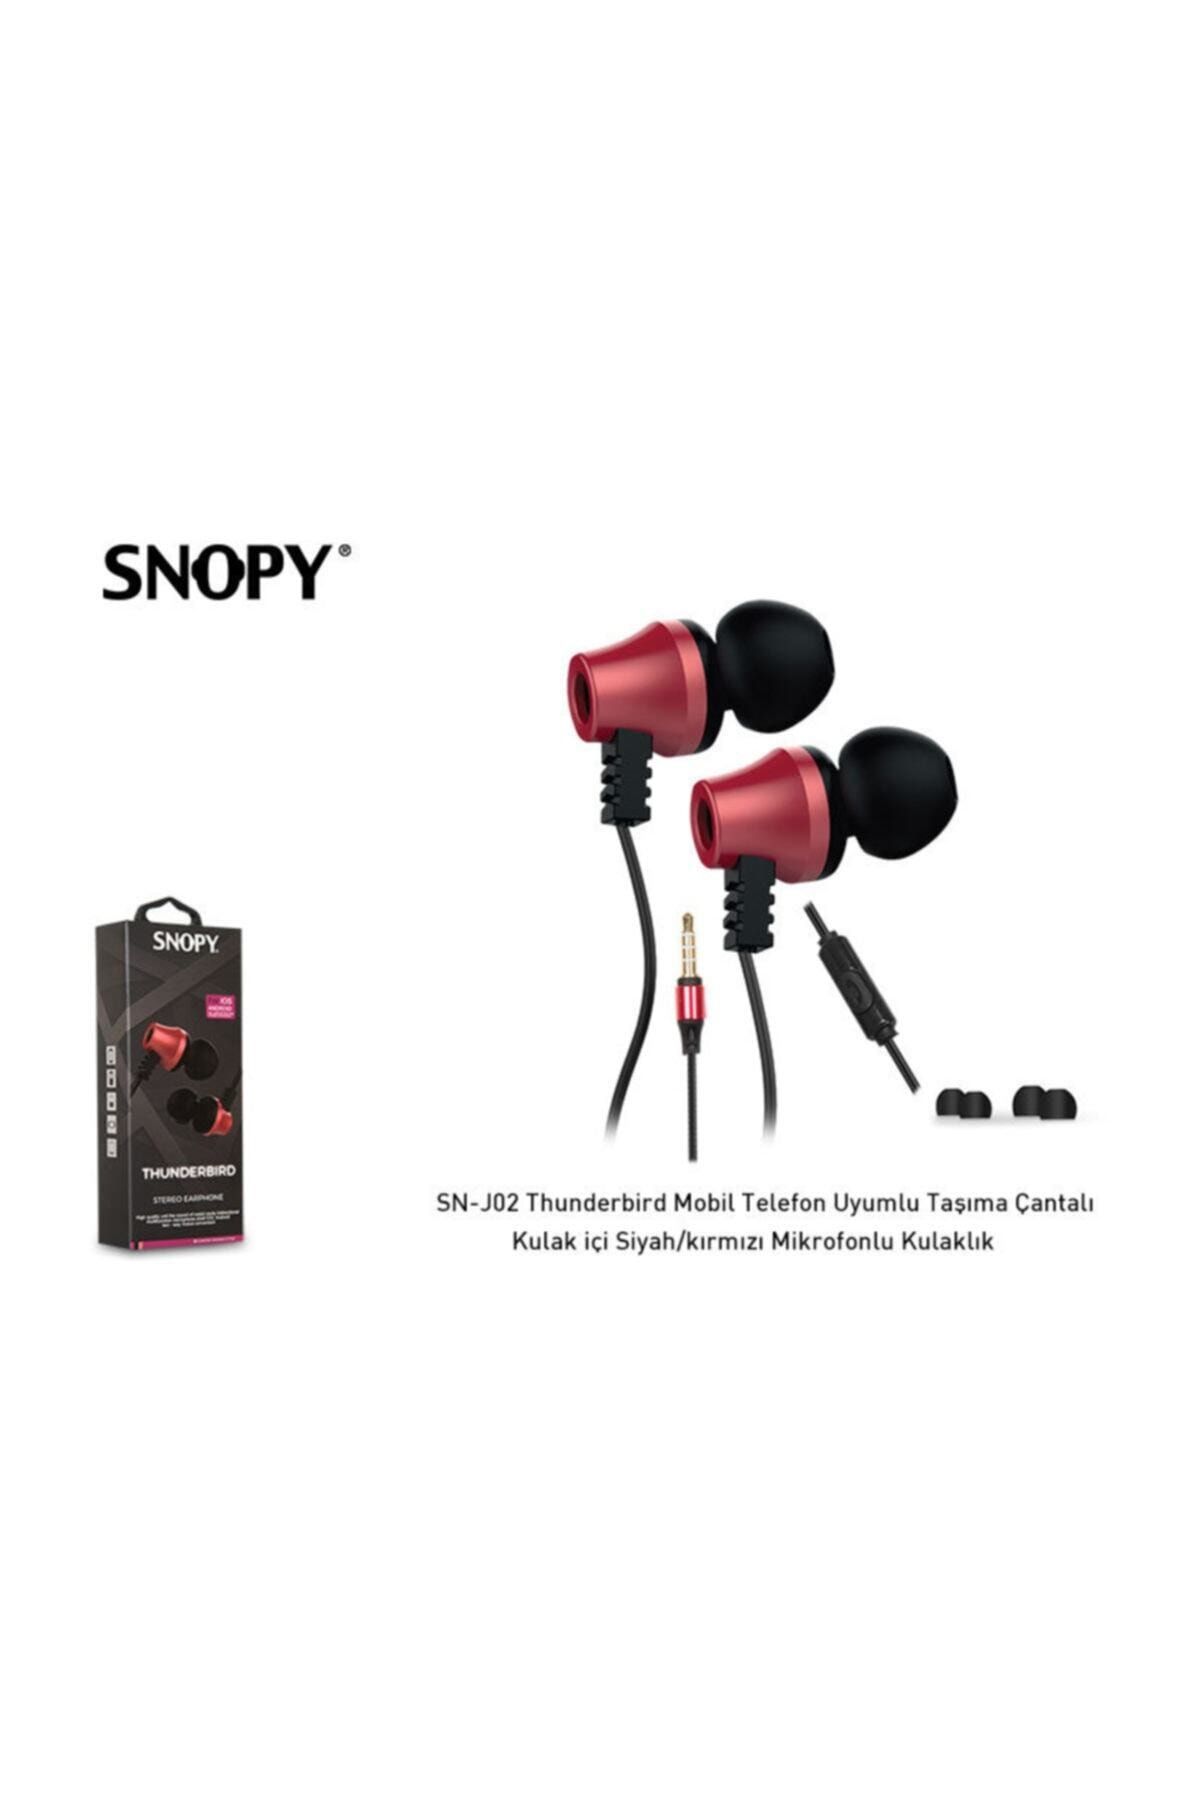 Snopy Mobil Telefon Uyumlu Taşıma Çantalı Kulak Içi Siyah/kırmızı Mikrofonlu Kula